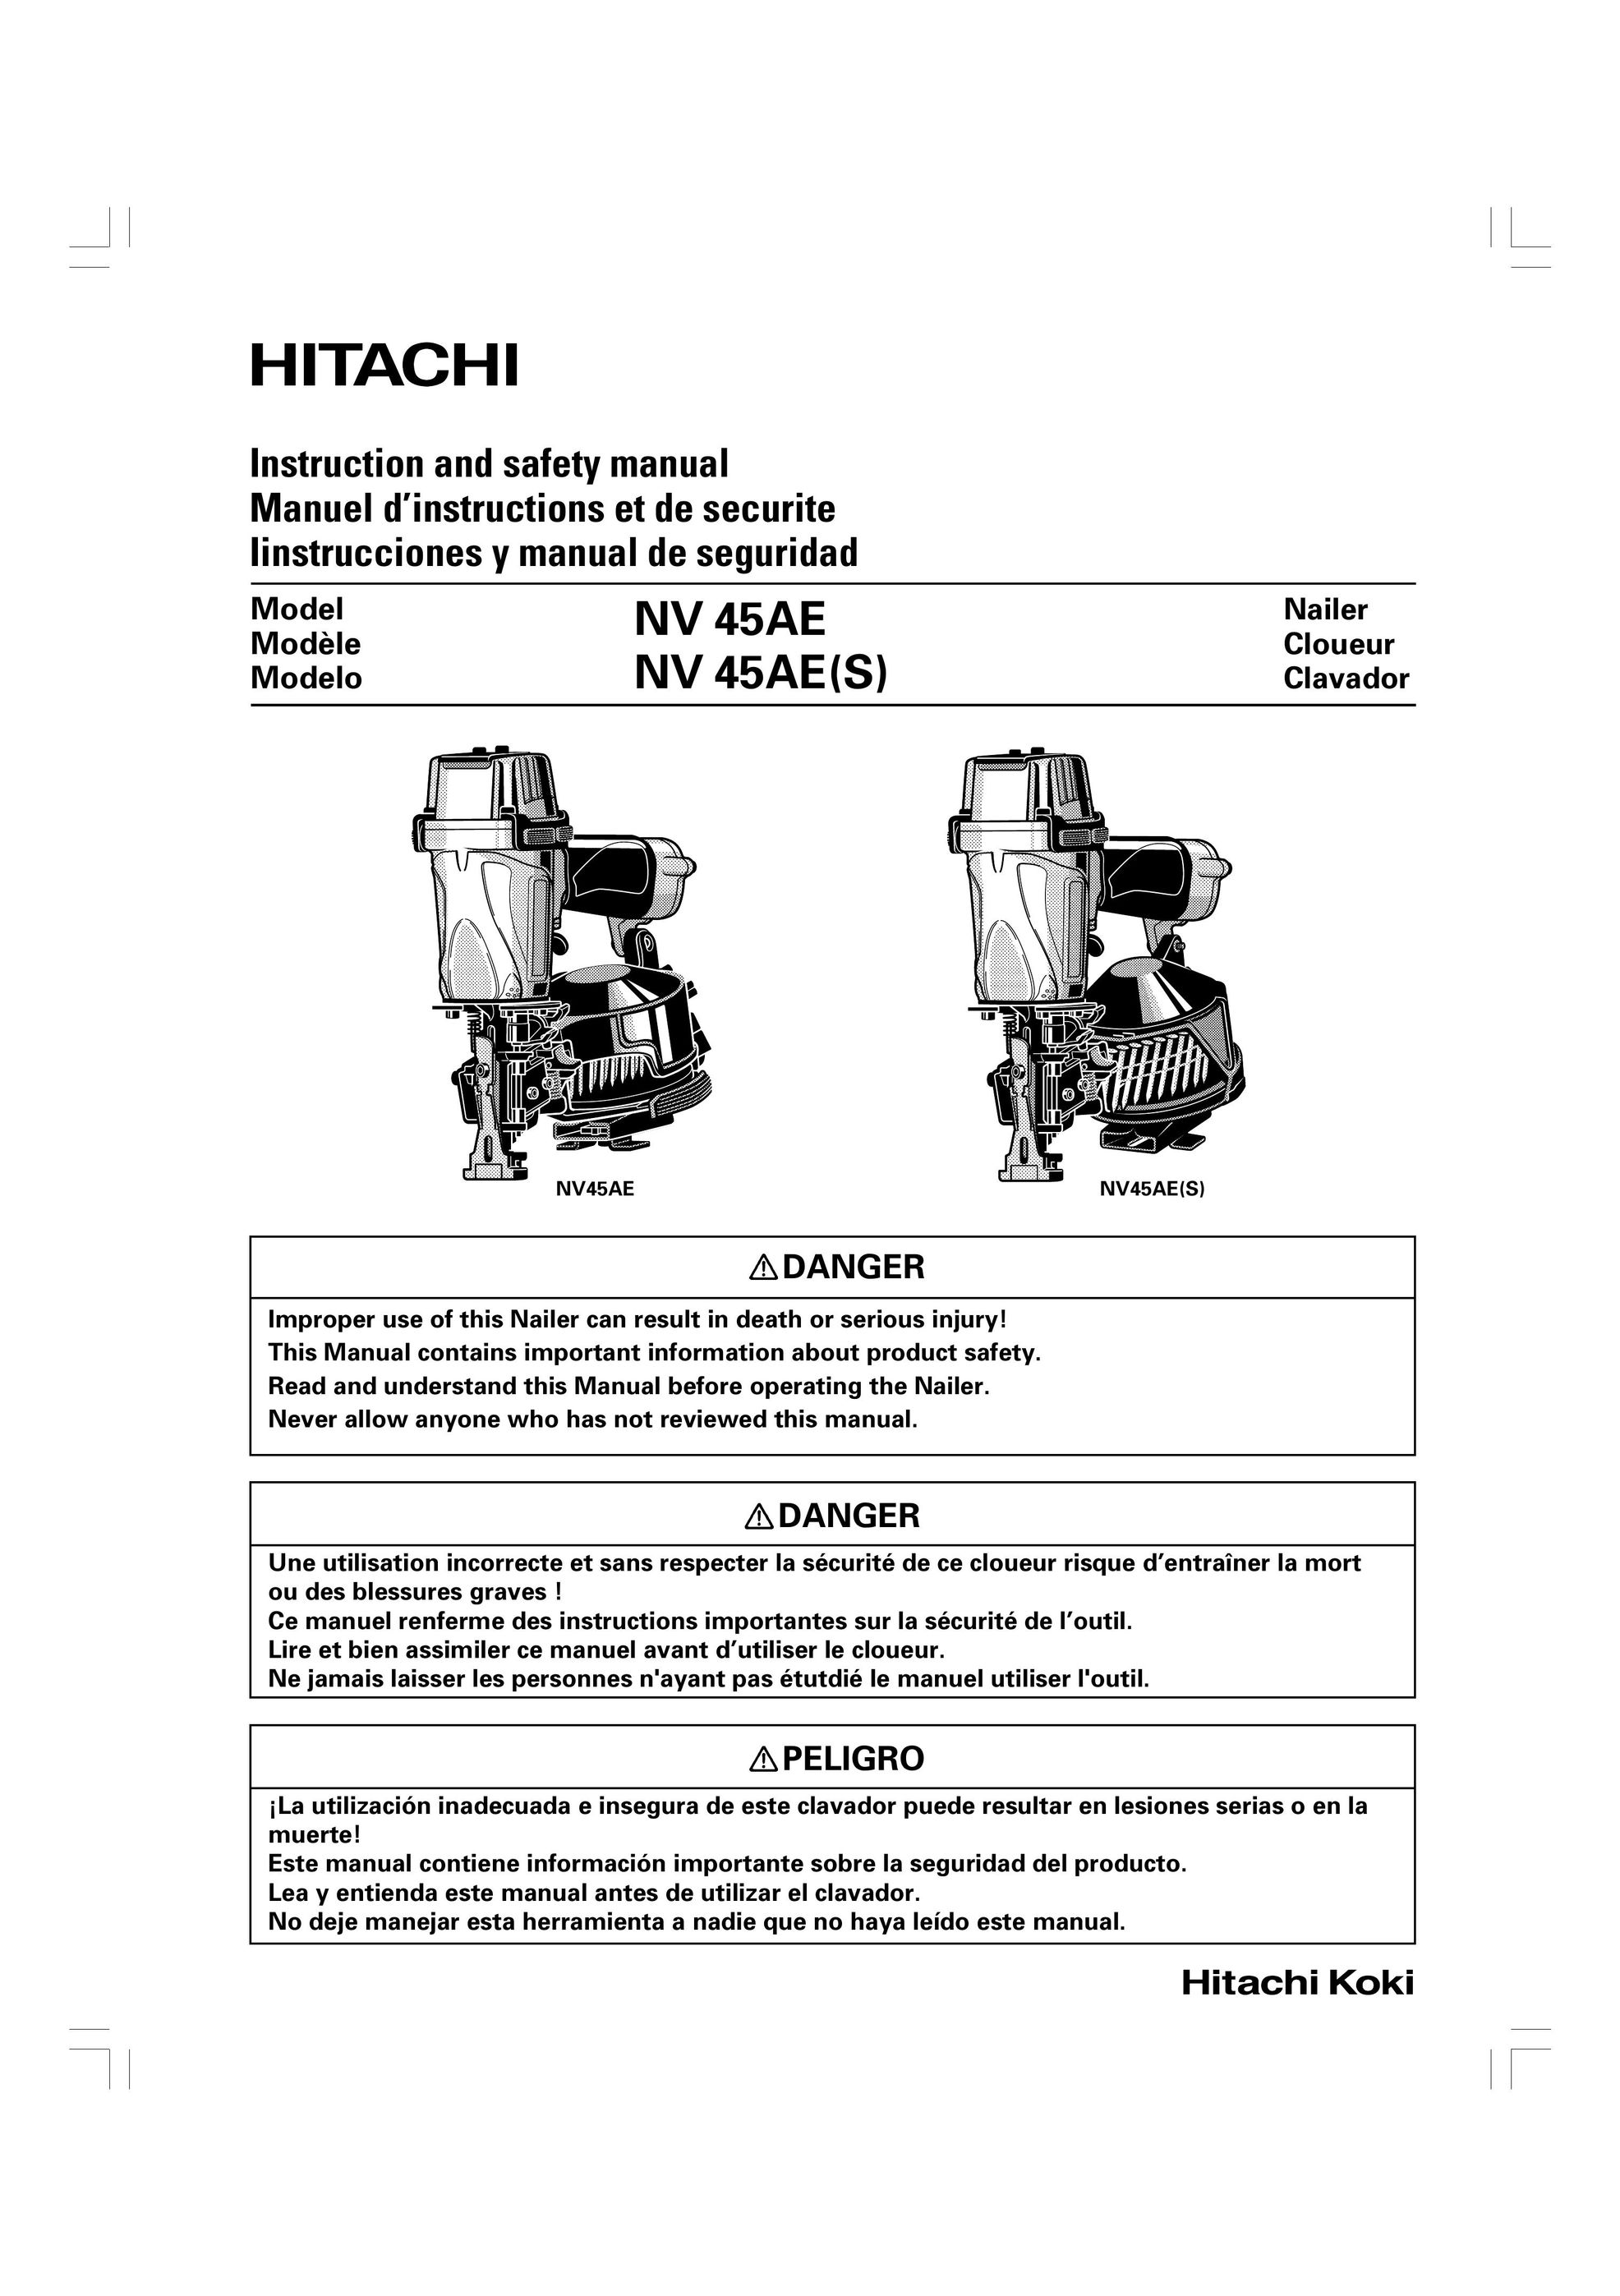 Hitachi NV 45AE(S) Nail Gun User Manual